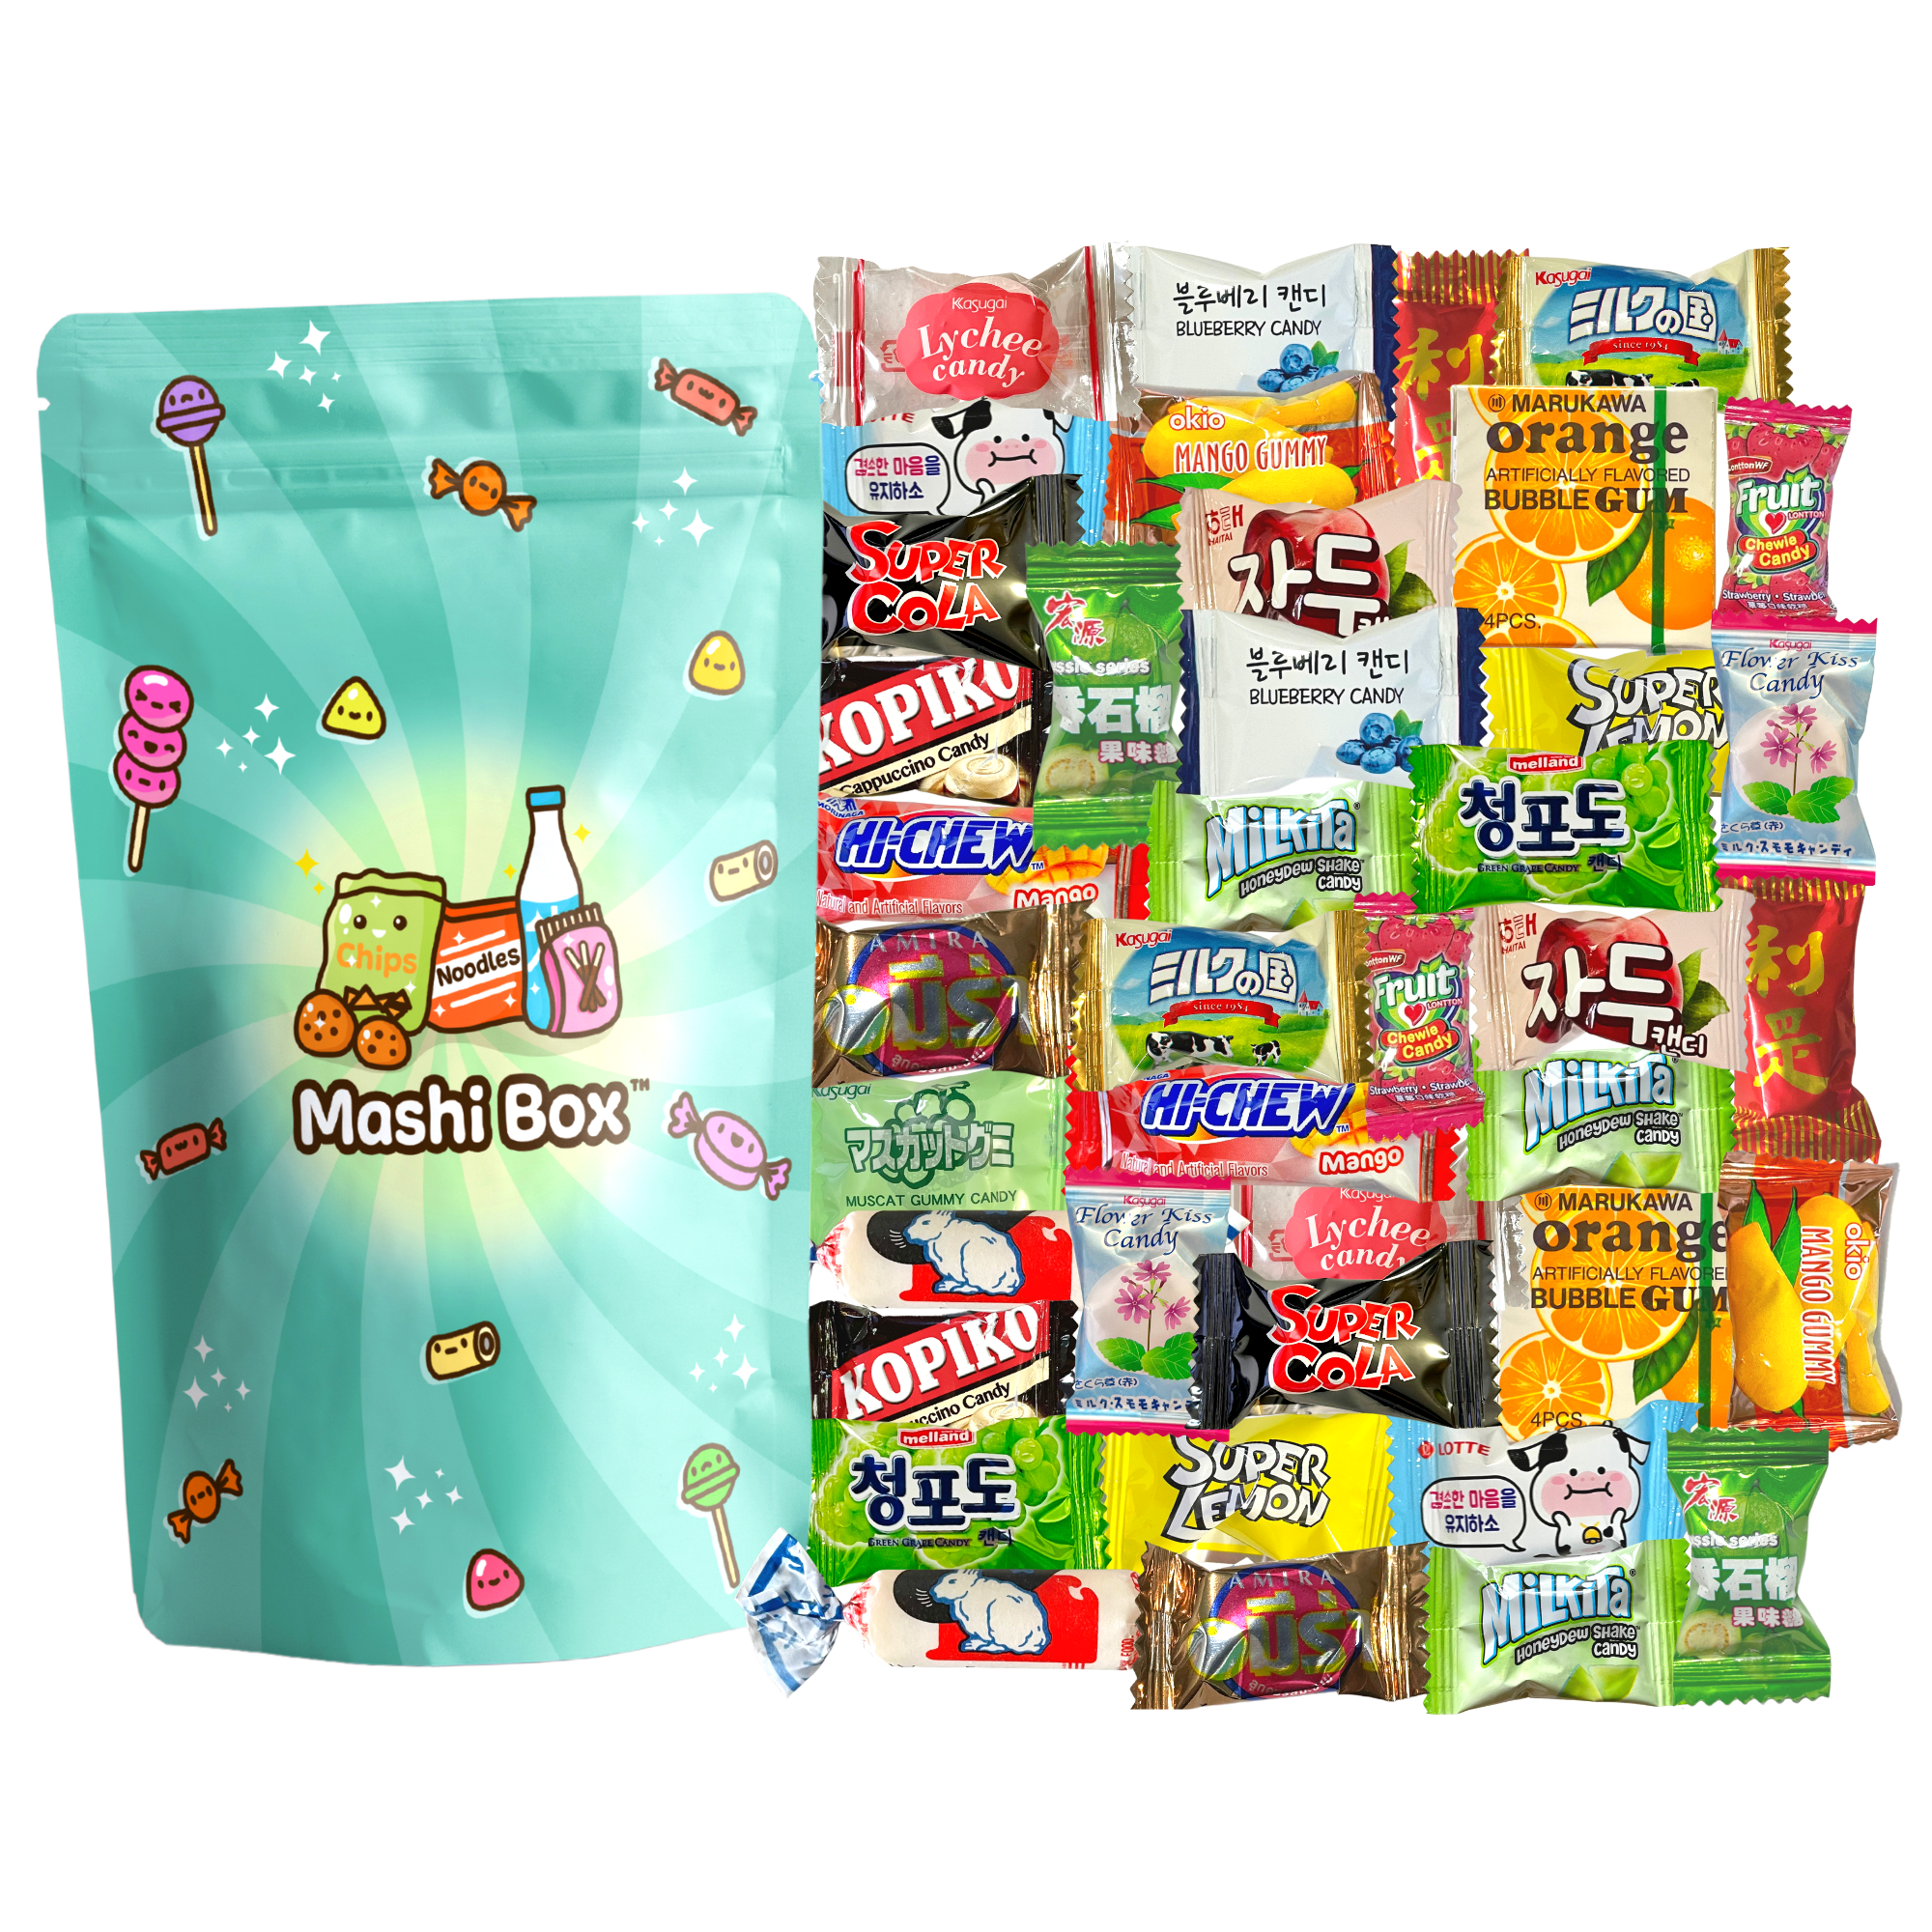 Mashi Box Asian Candy Variety Bag (40 Pieces) - Walmart.com